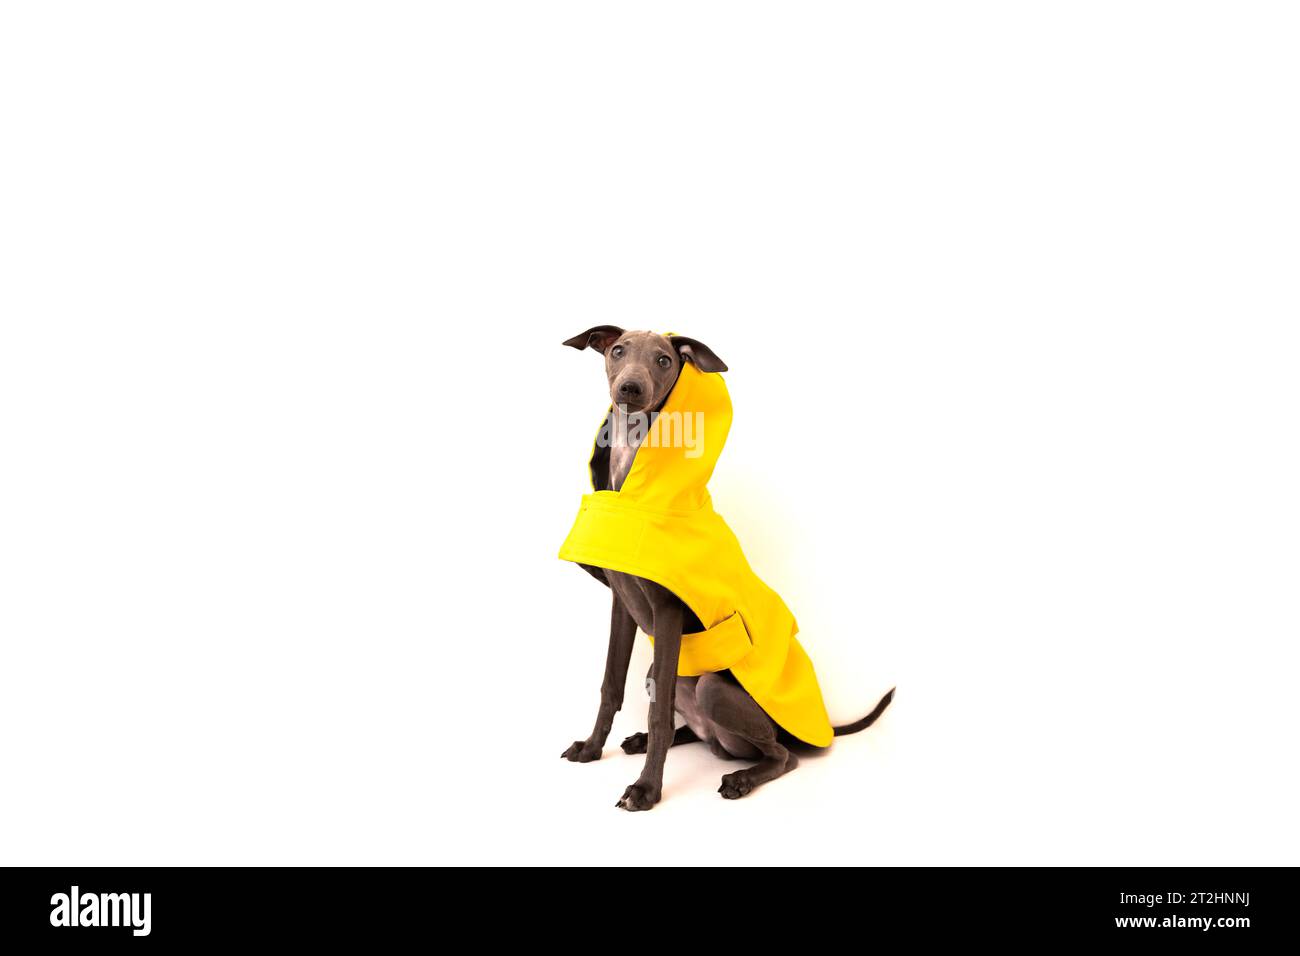 Funny dog Italian Greyhound in yellow raincoat isolated on a white background. Stock Photo